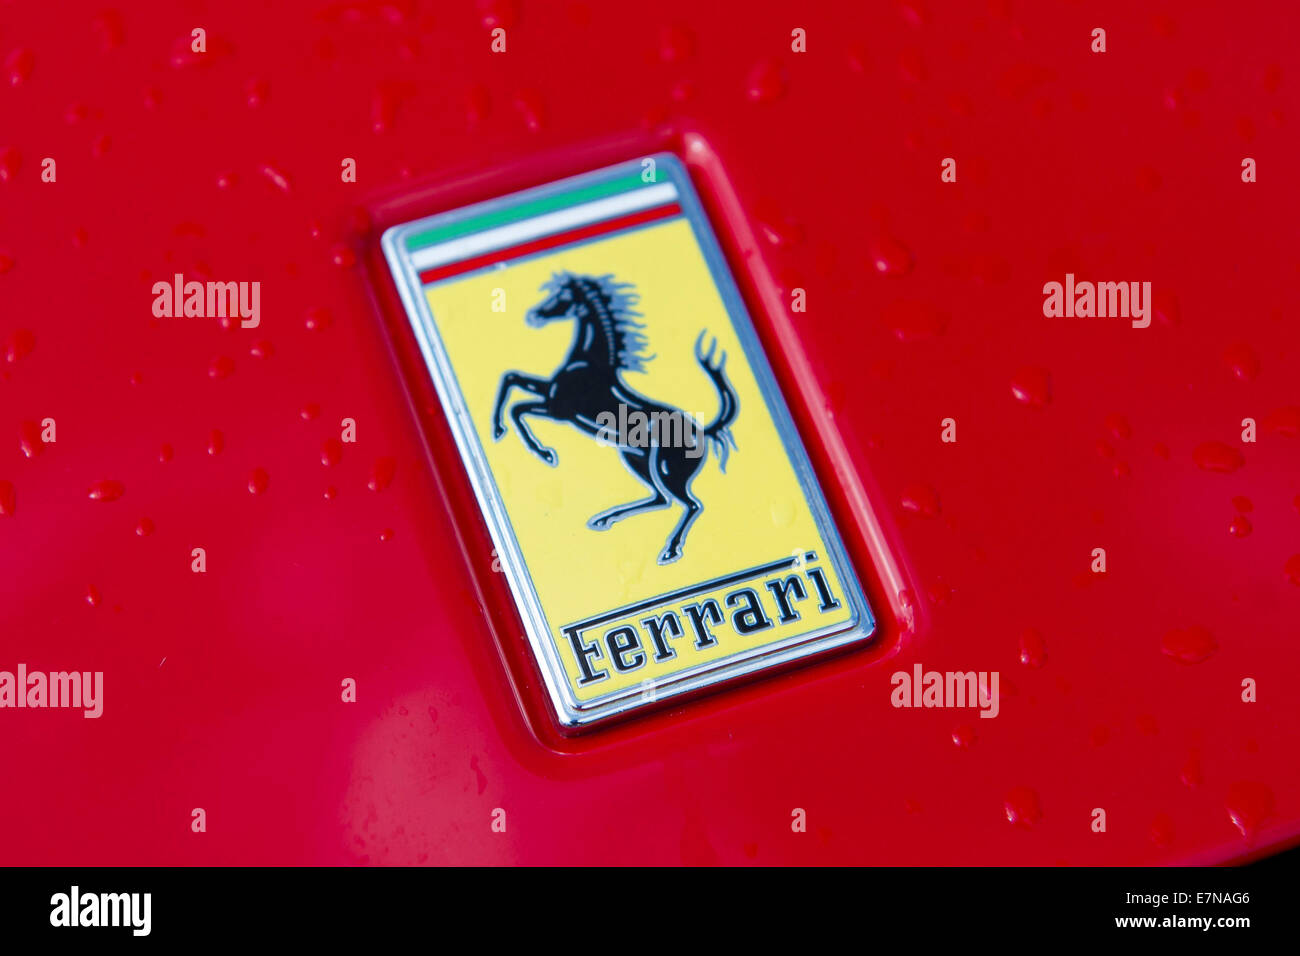 A Ferrari car badge. Stock Photo